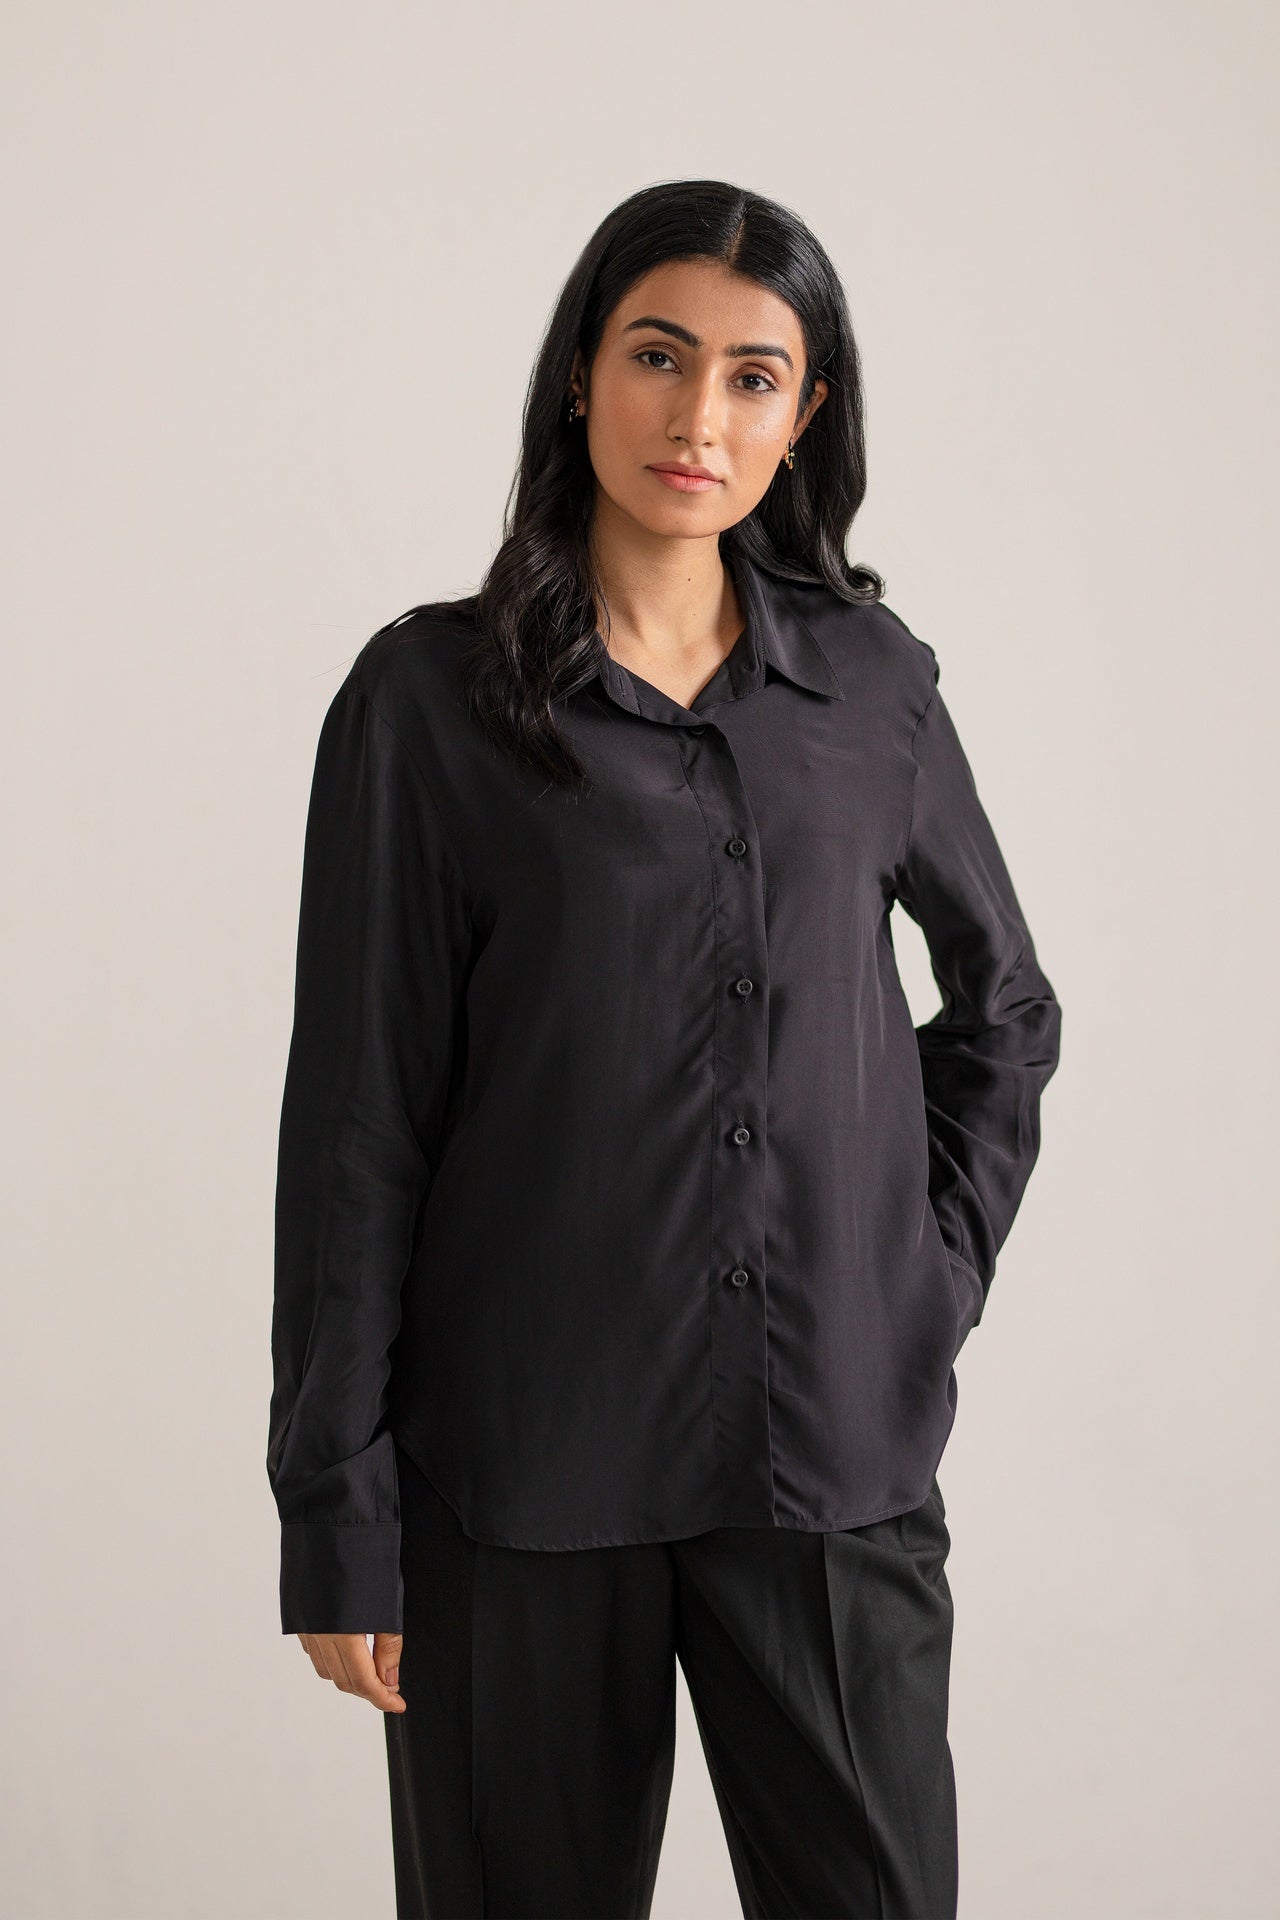 Black Shirt for Women in Pakistan